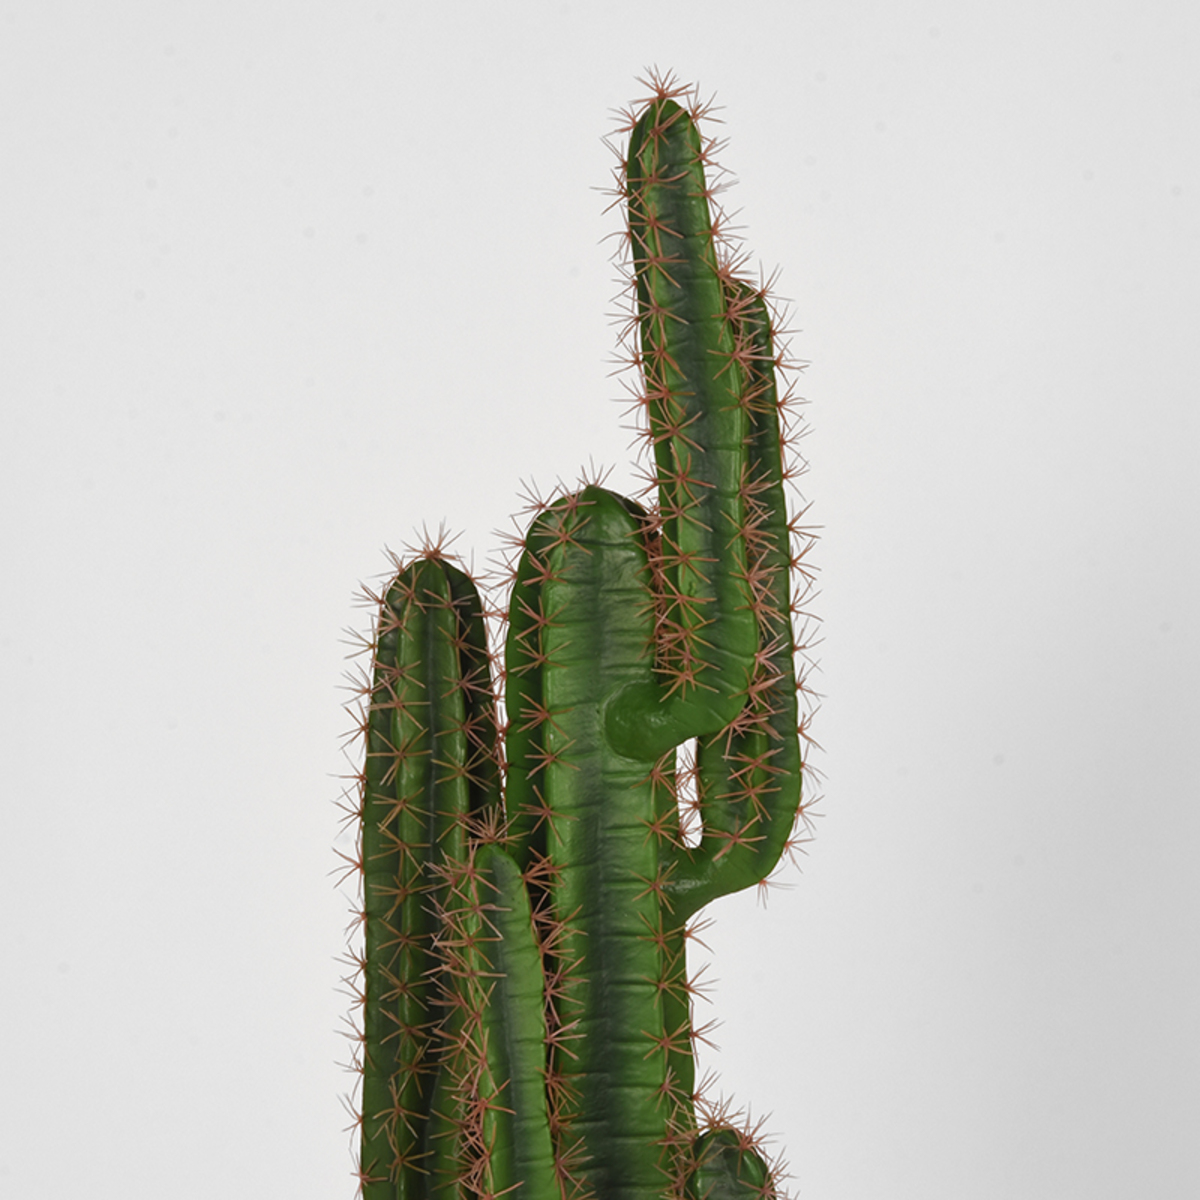 Kunstplant Cactus - 130 cm